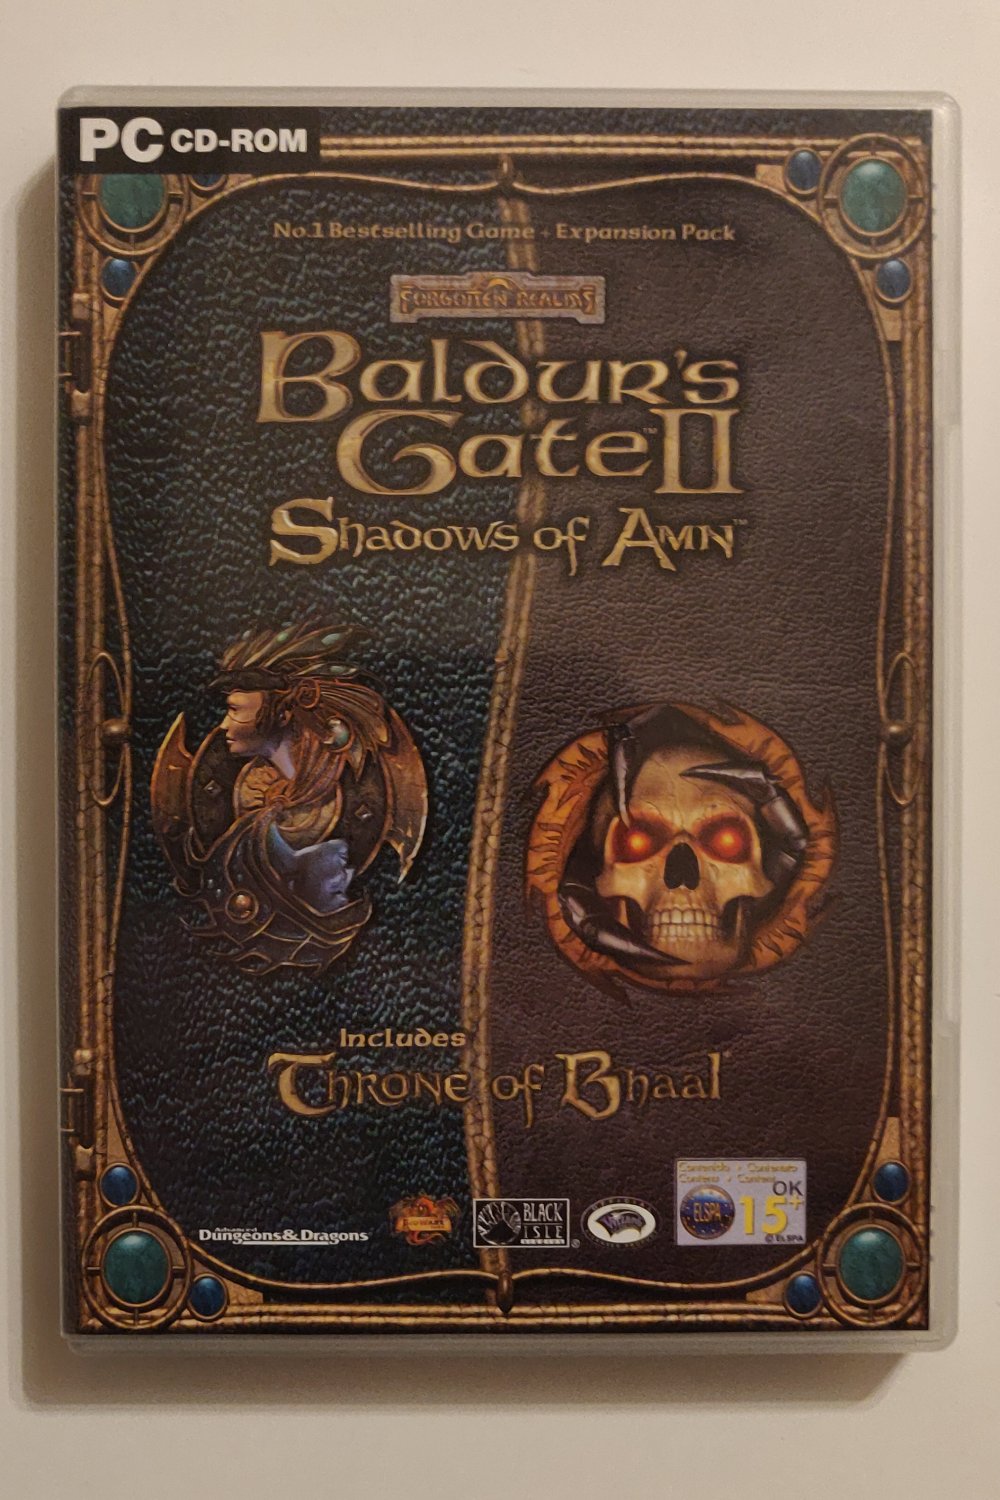 Baldur's Gate II: Shadows of Amn (PC) (CIB) - Picture 1 of 1